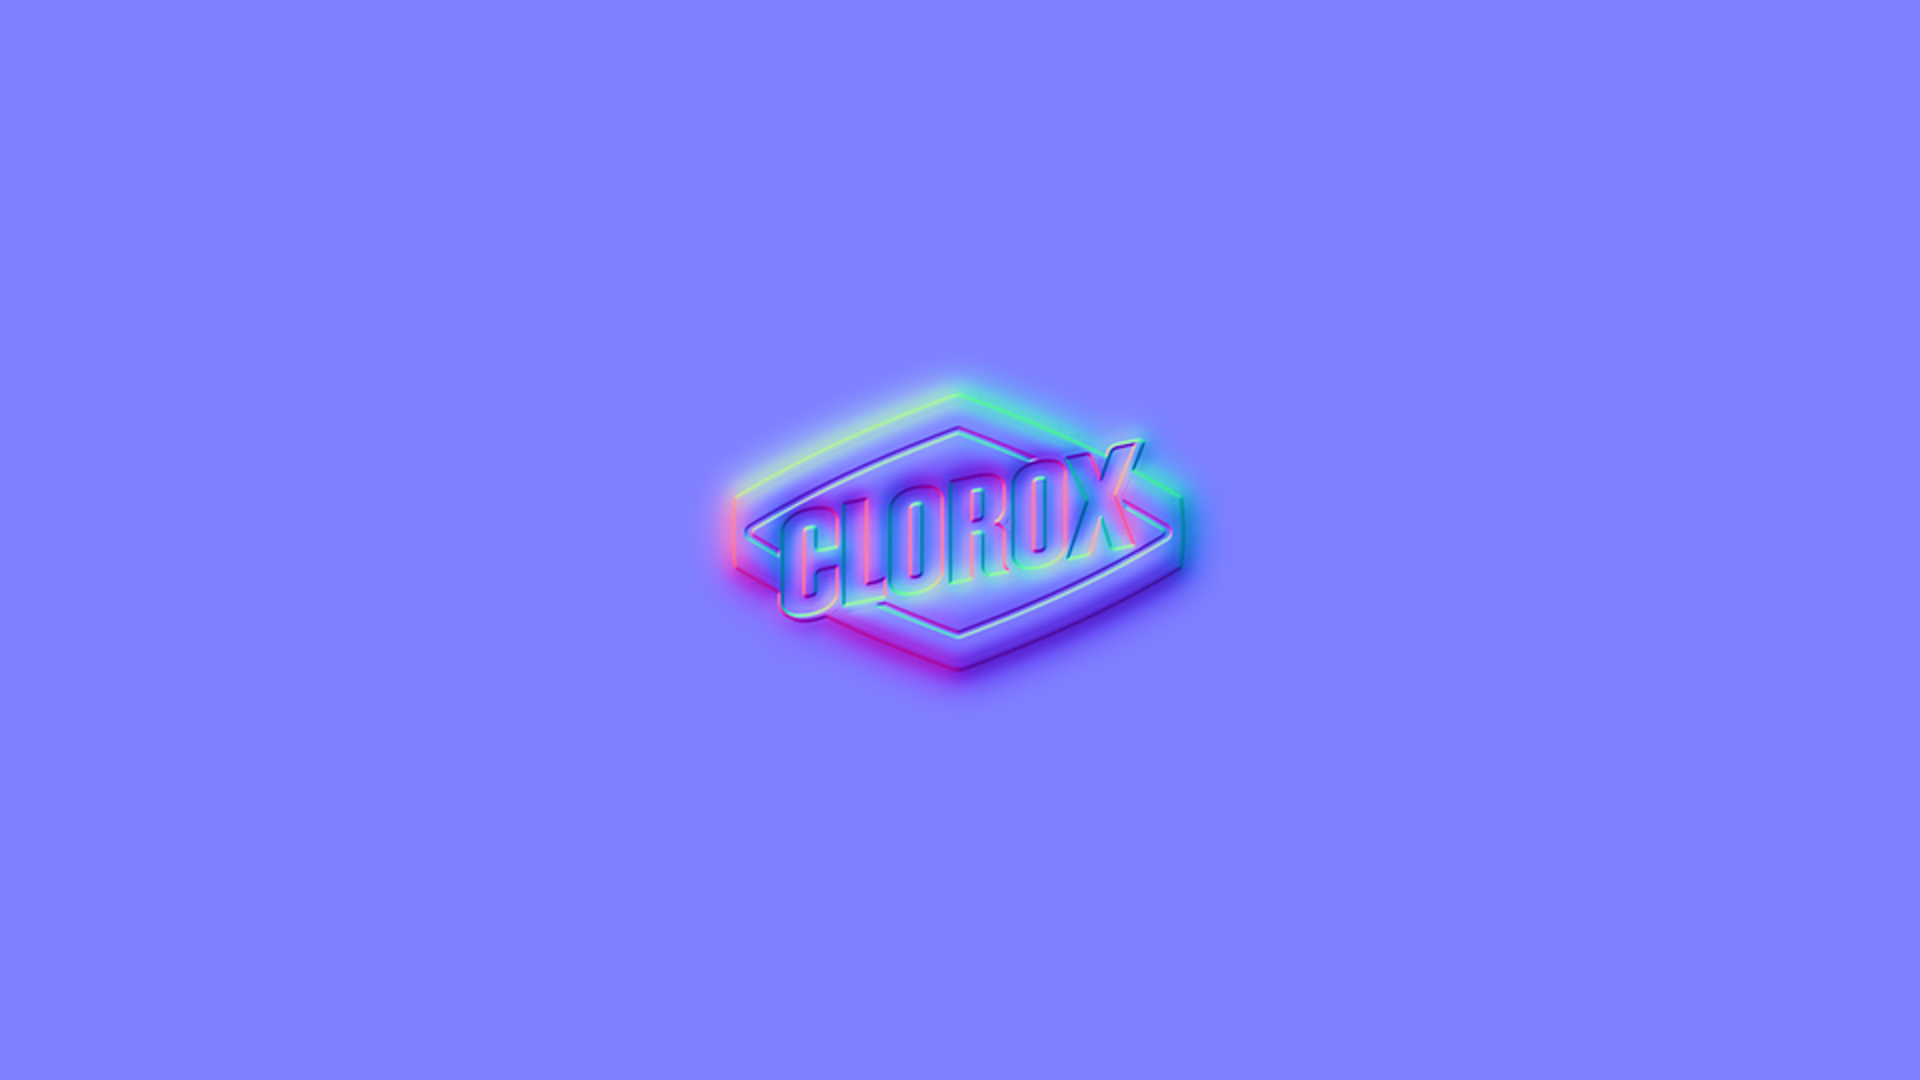 clorox [1920 x 1080]. R wallpaper, Desktop background image, Computer wallpaper